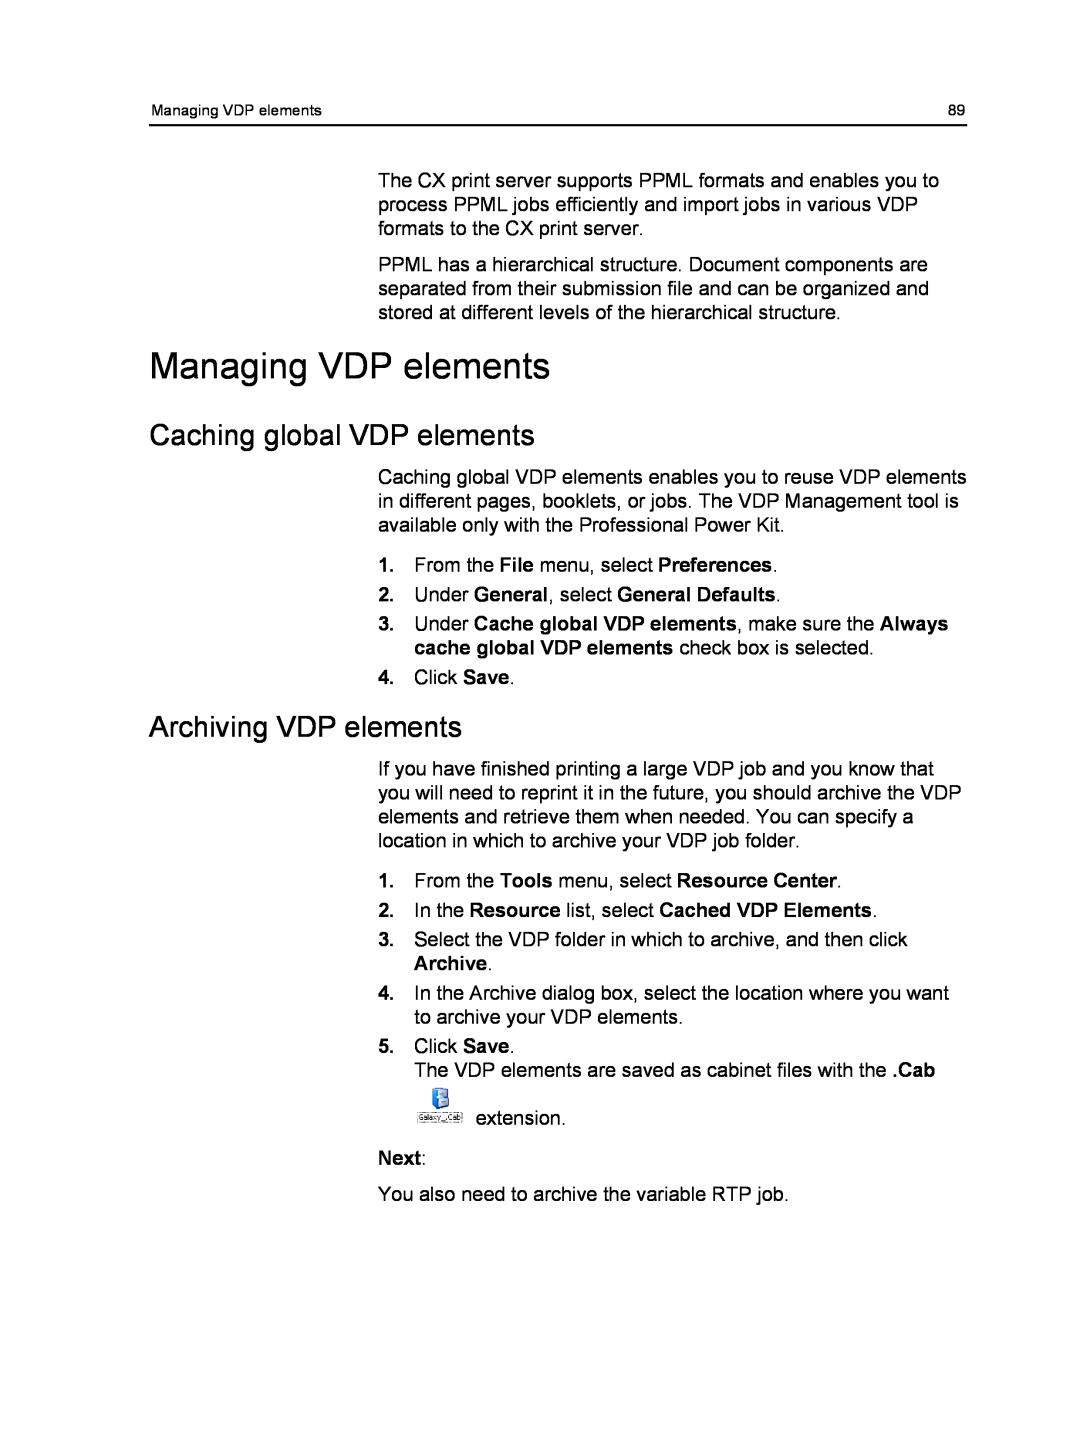 Xerox 550, 560 manual Managing VDP elements, Caching global VDP elements, Archiving VDP elements, Next 